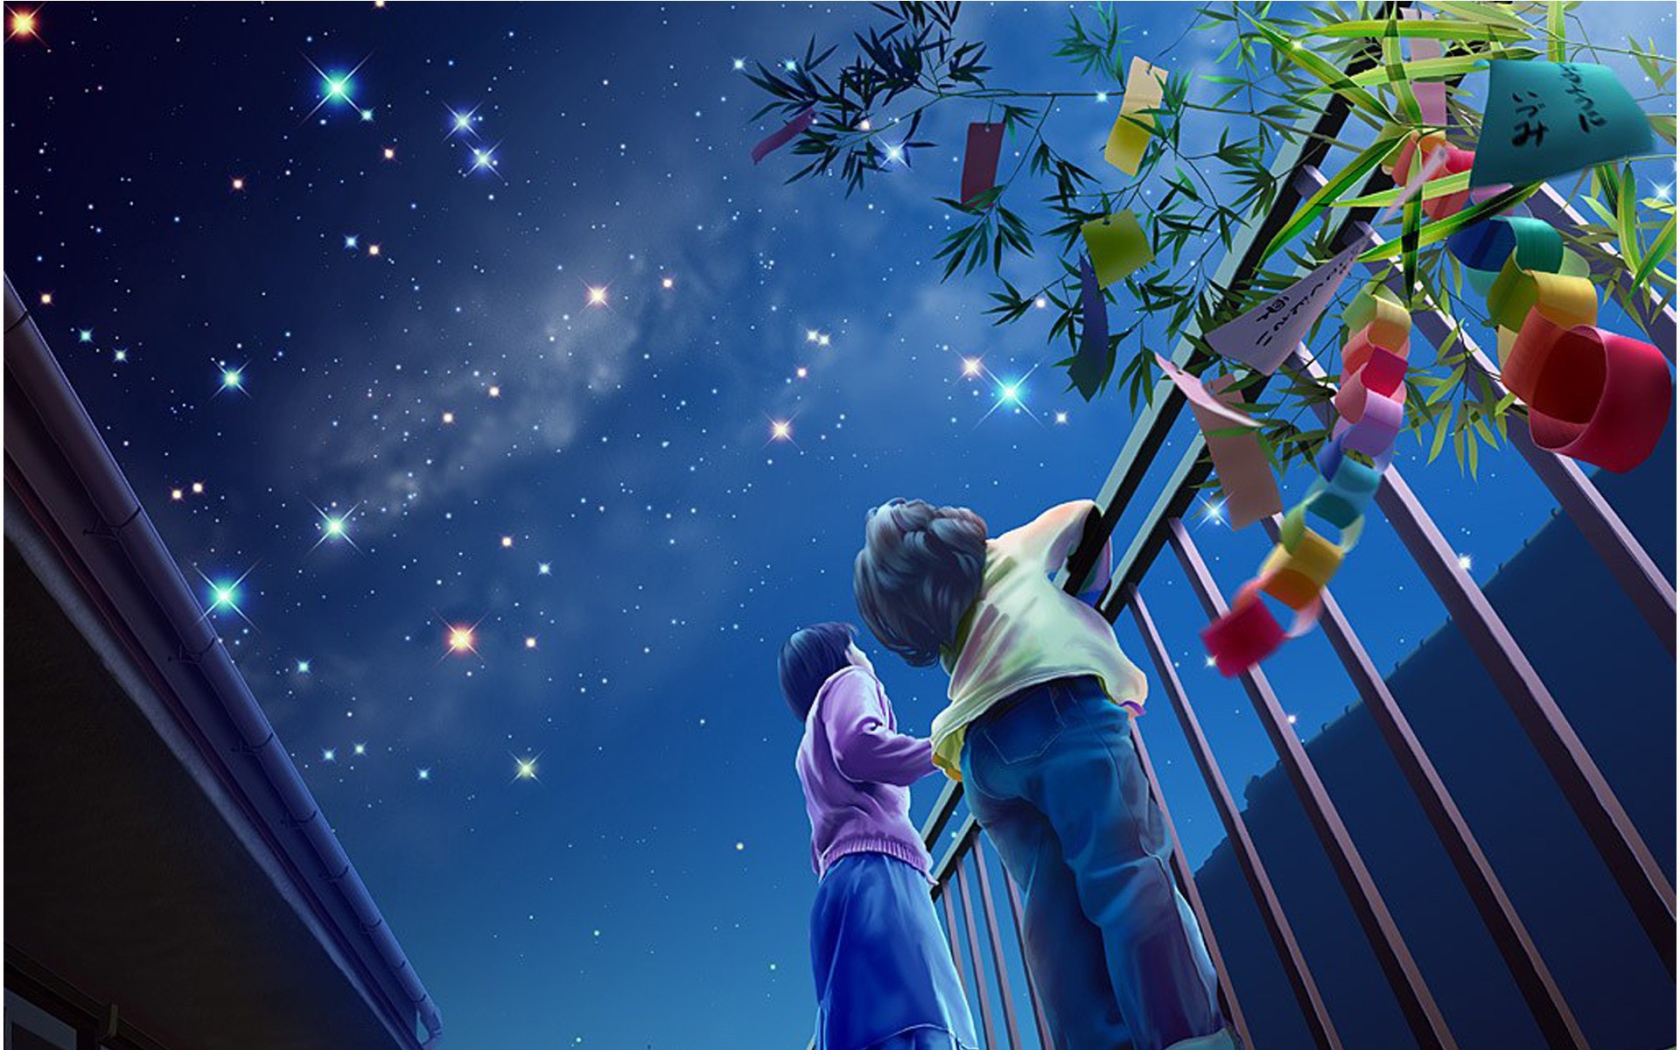 Children look to the stars